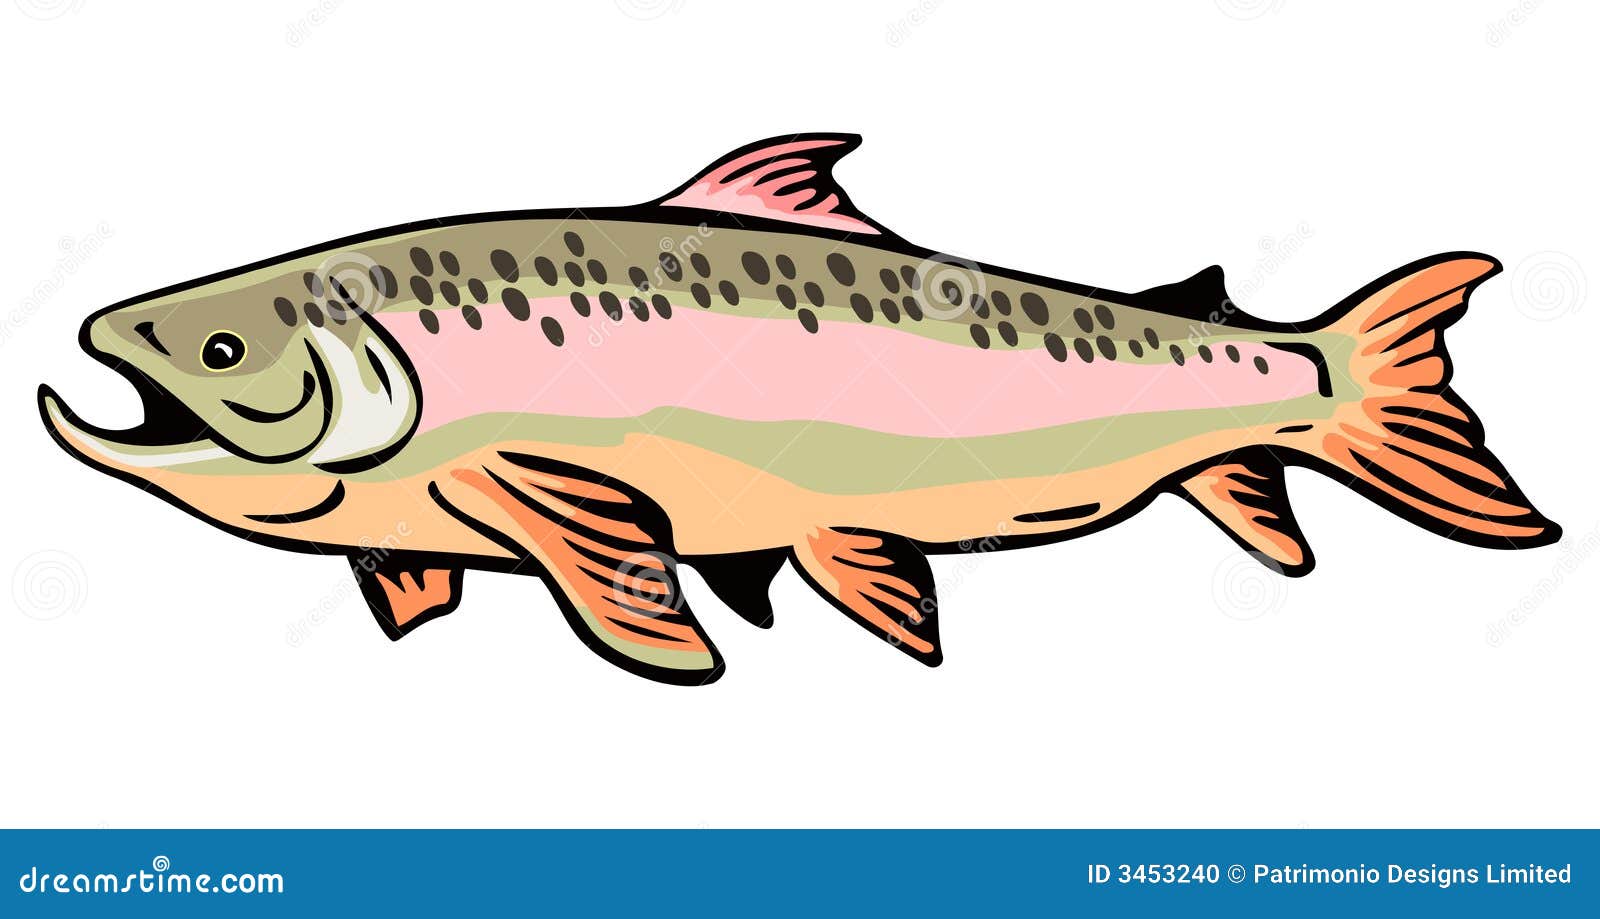 clipart trout fish - photo #37